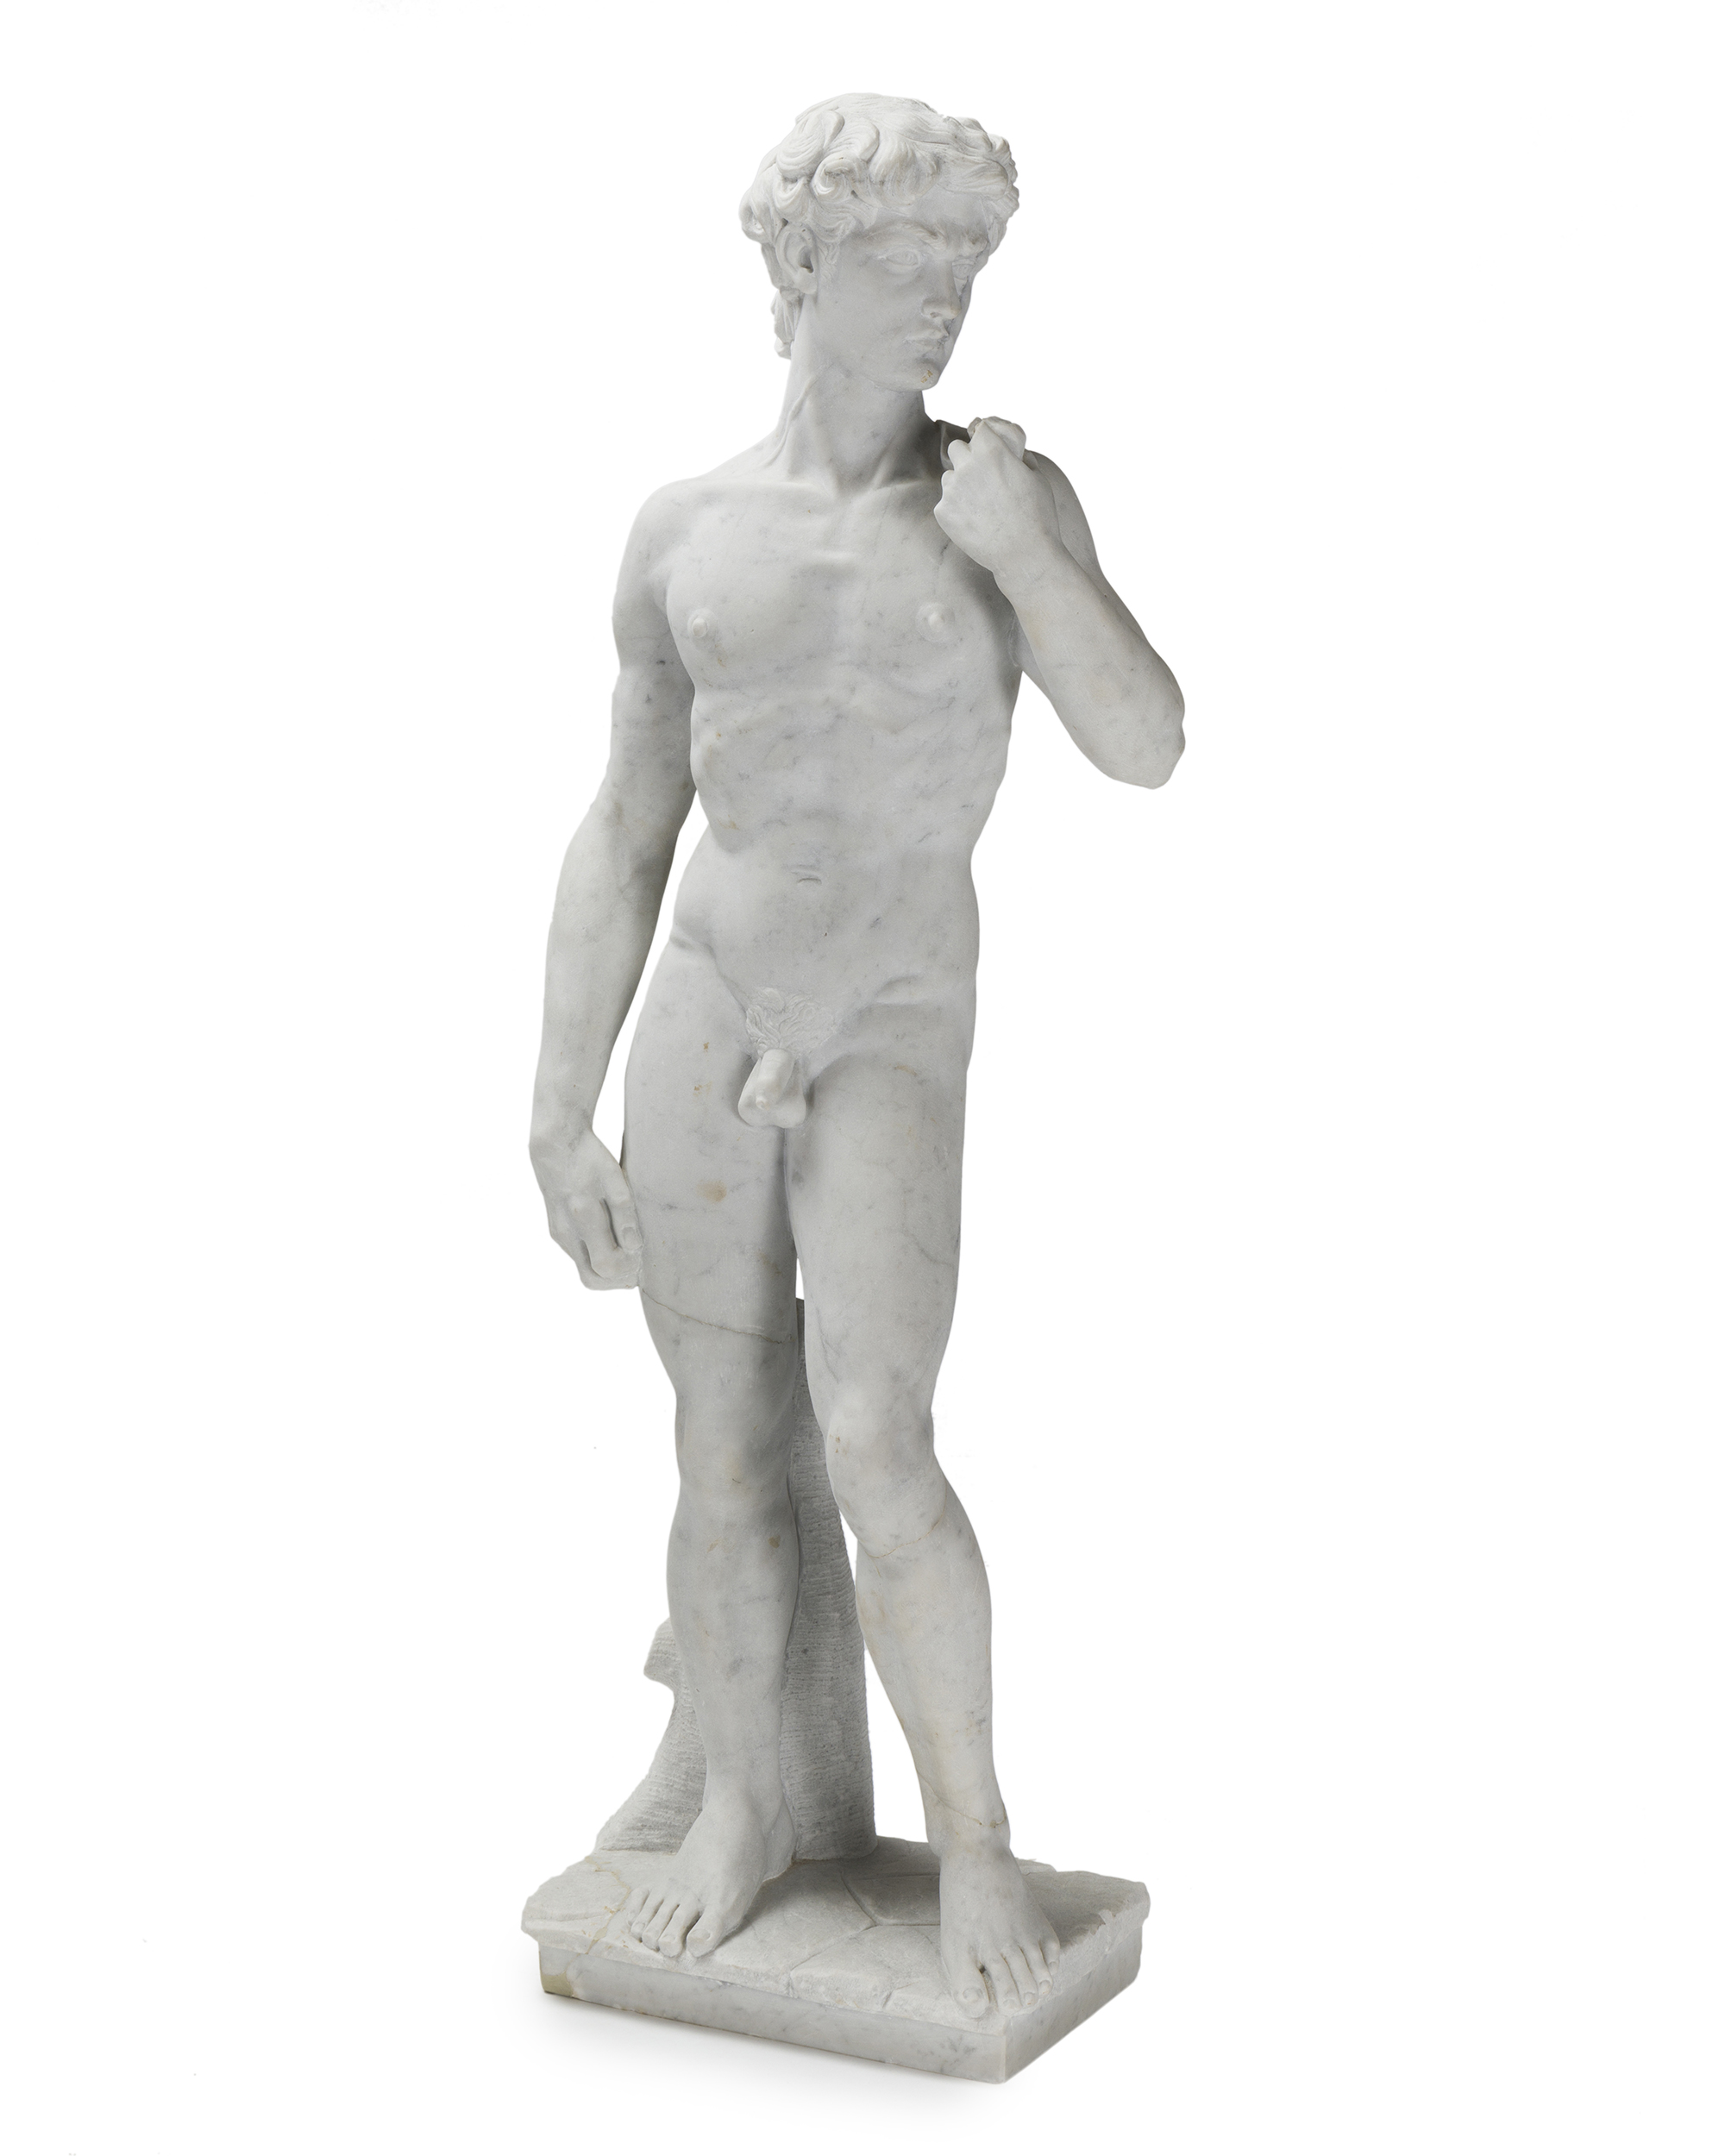 A marble sculpture after Michaelangelo's "David"